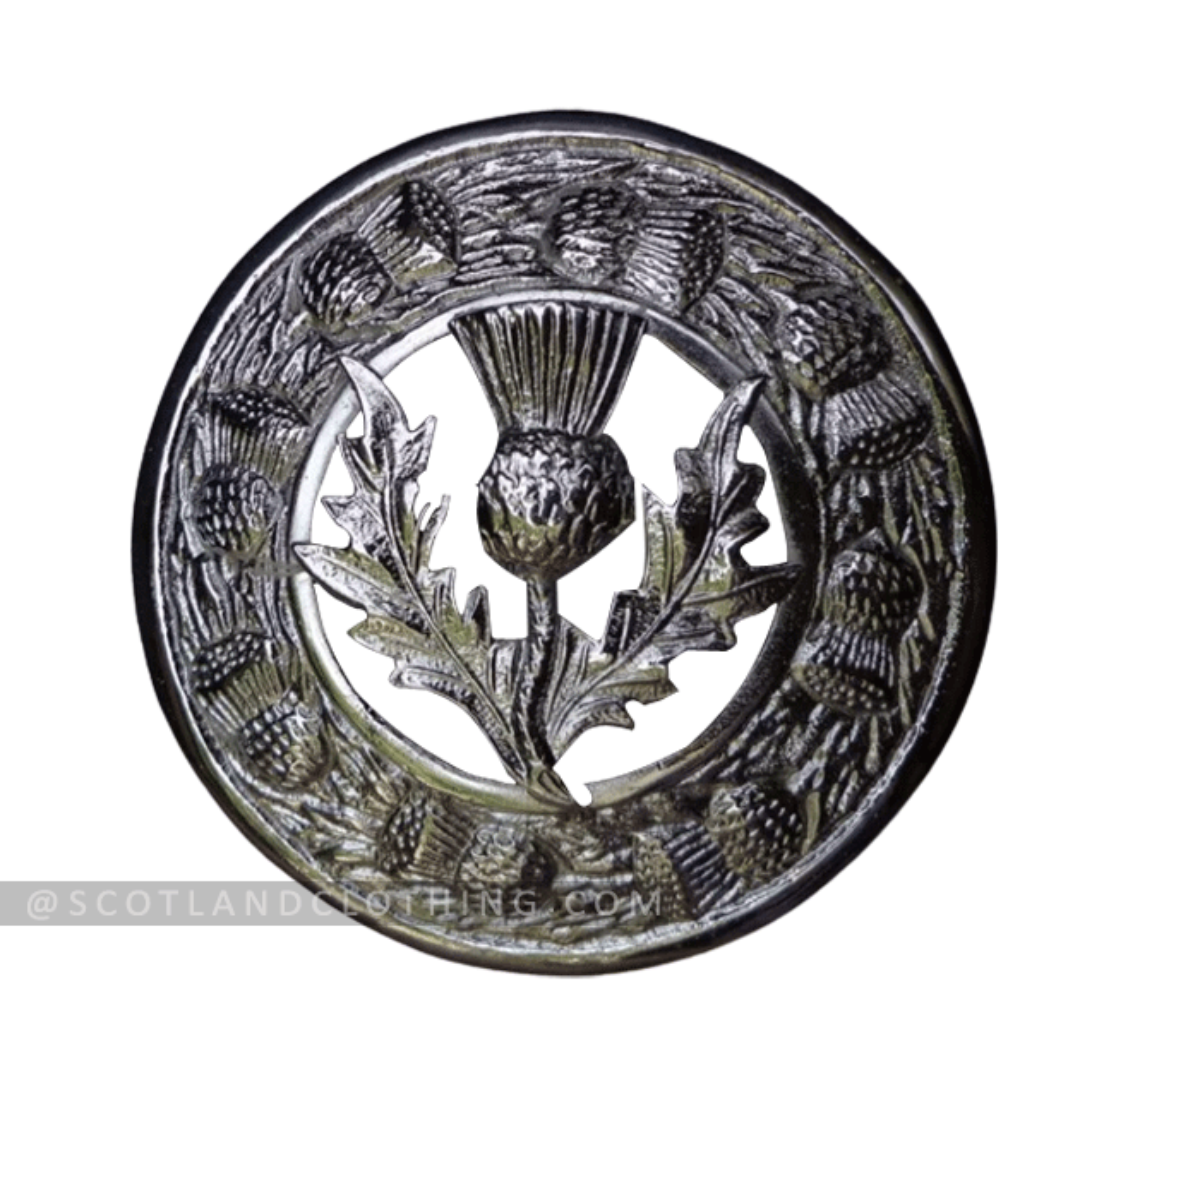 Kilt Fly Plaid Brooch Thistle Masonic Design High Quality Antique Finish 